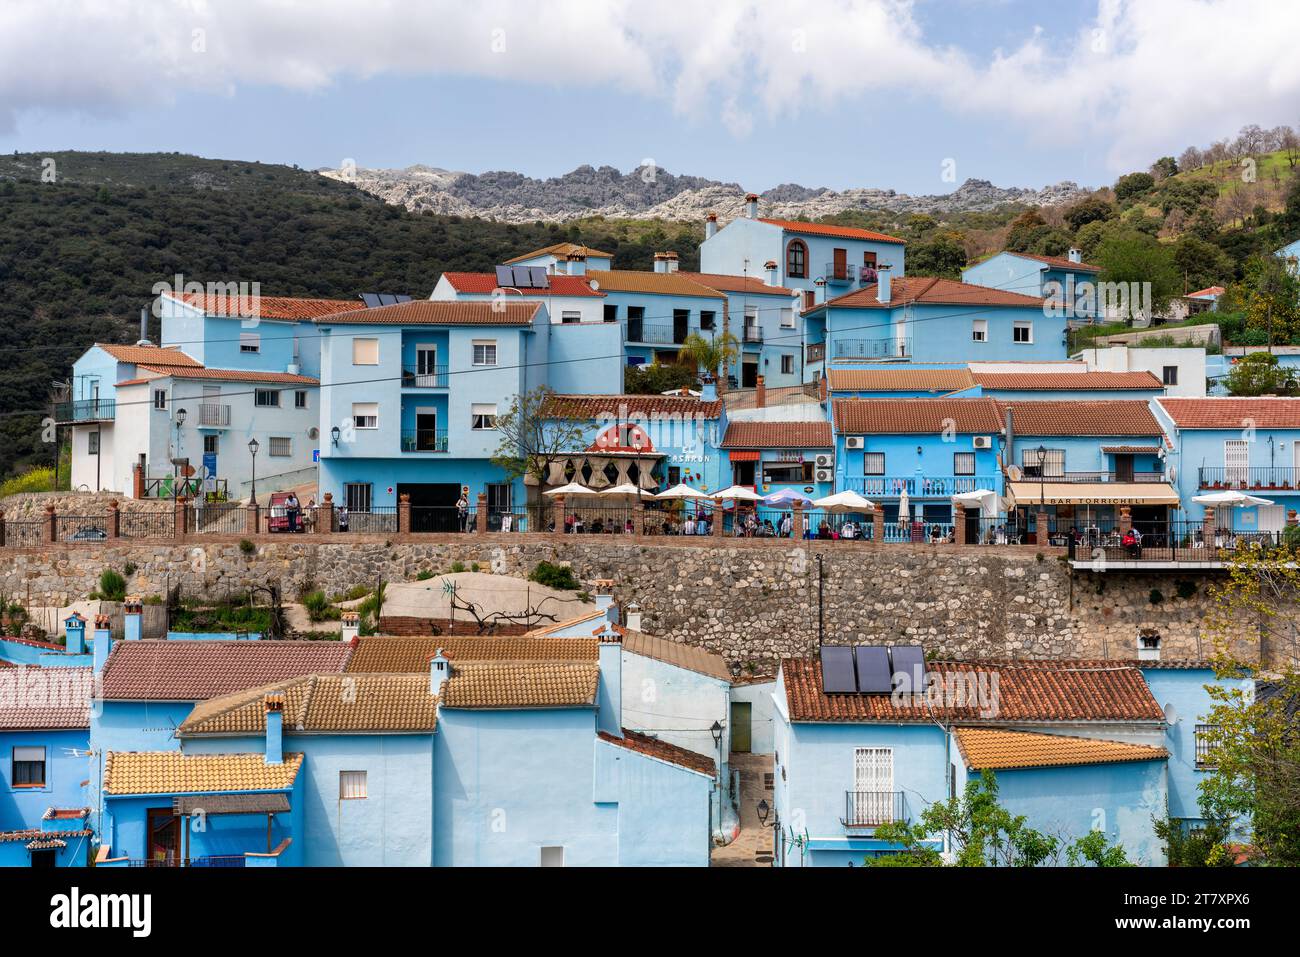 Blau lackiertes Schlumpfhaus Dorf Juzcar, Pueblos Blancos Region, Andalusien, Spanien, Europa Stockfoto